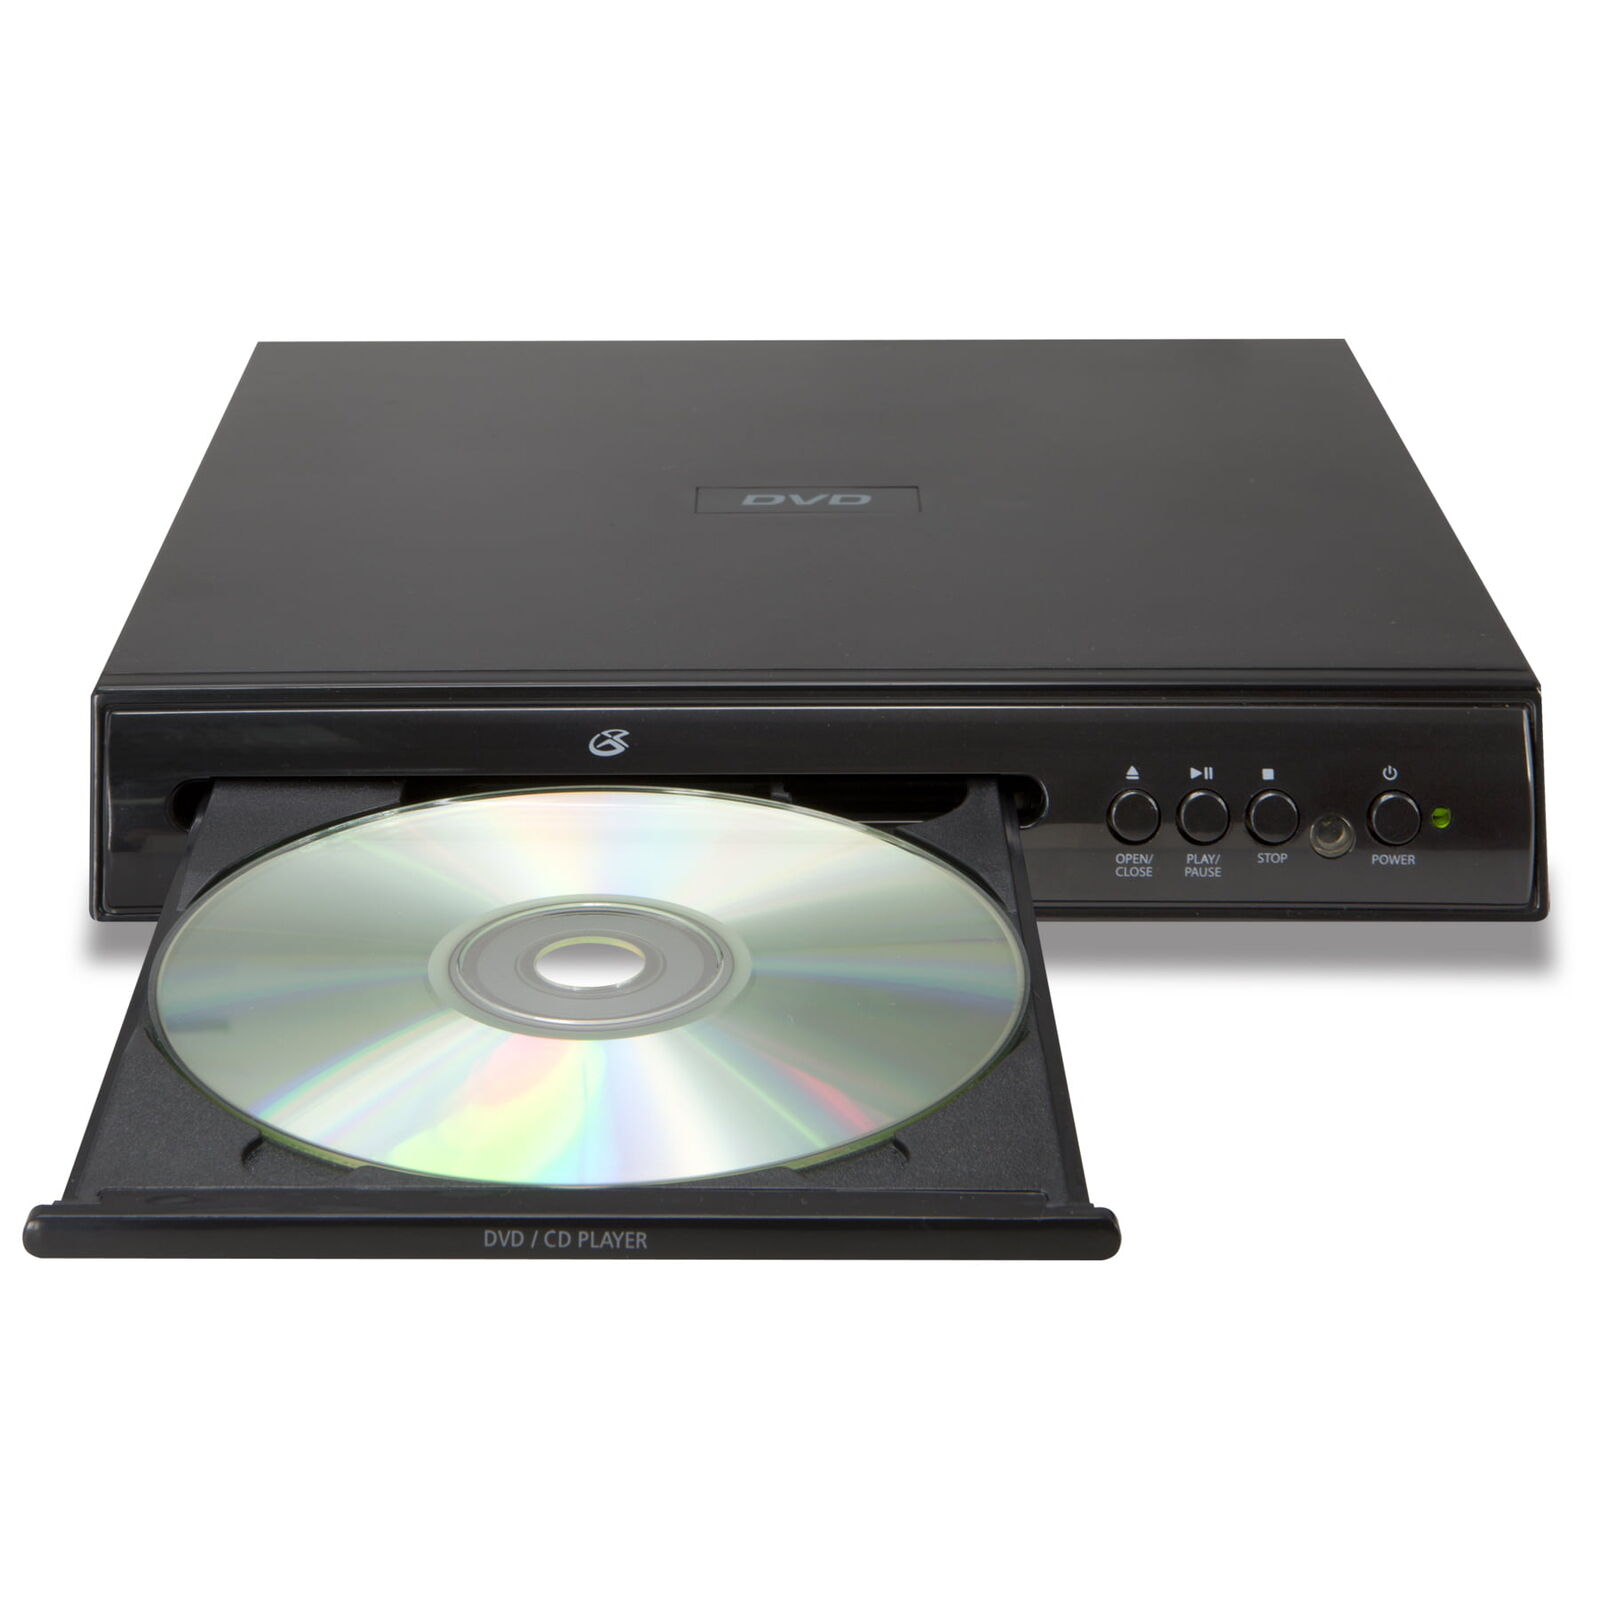 New GPX D200B Progressive Scan DVD Player with Remote, Black GPX RY5791 D200B